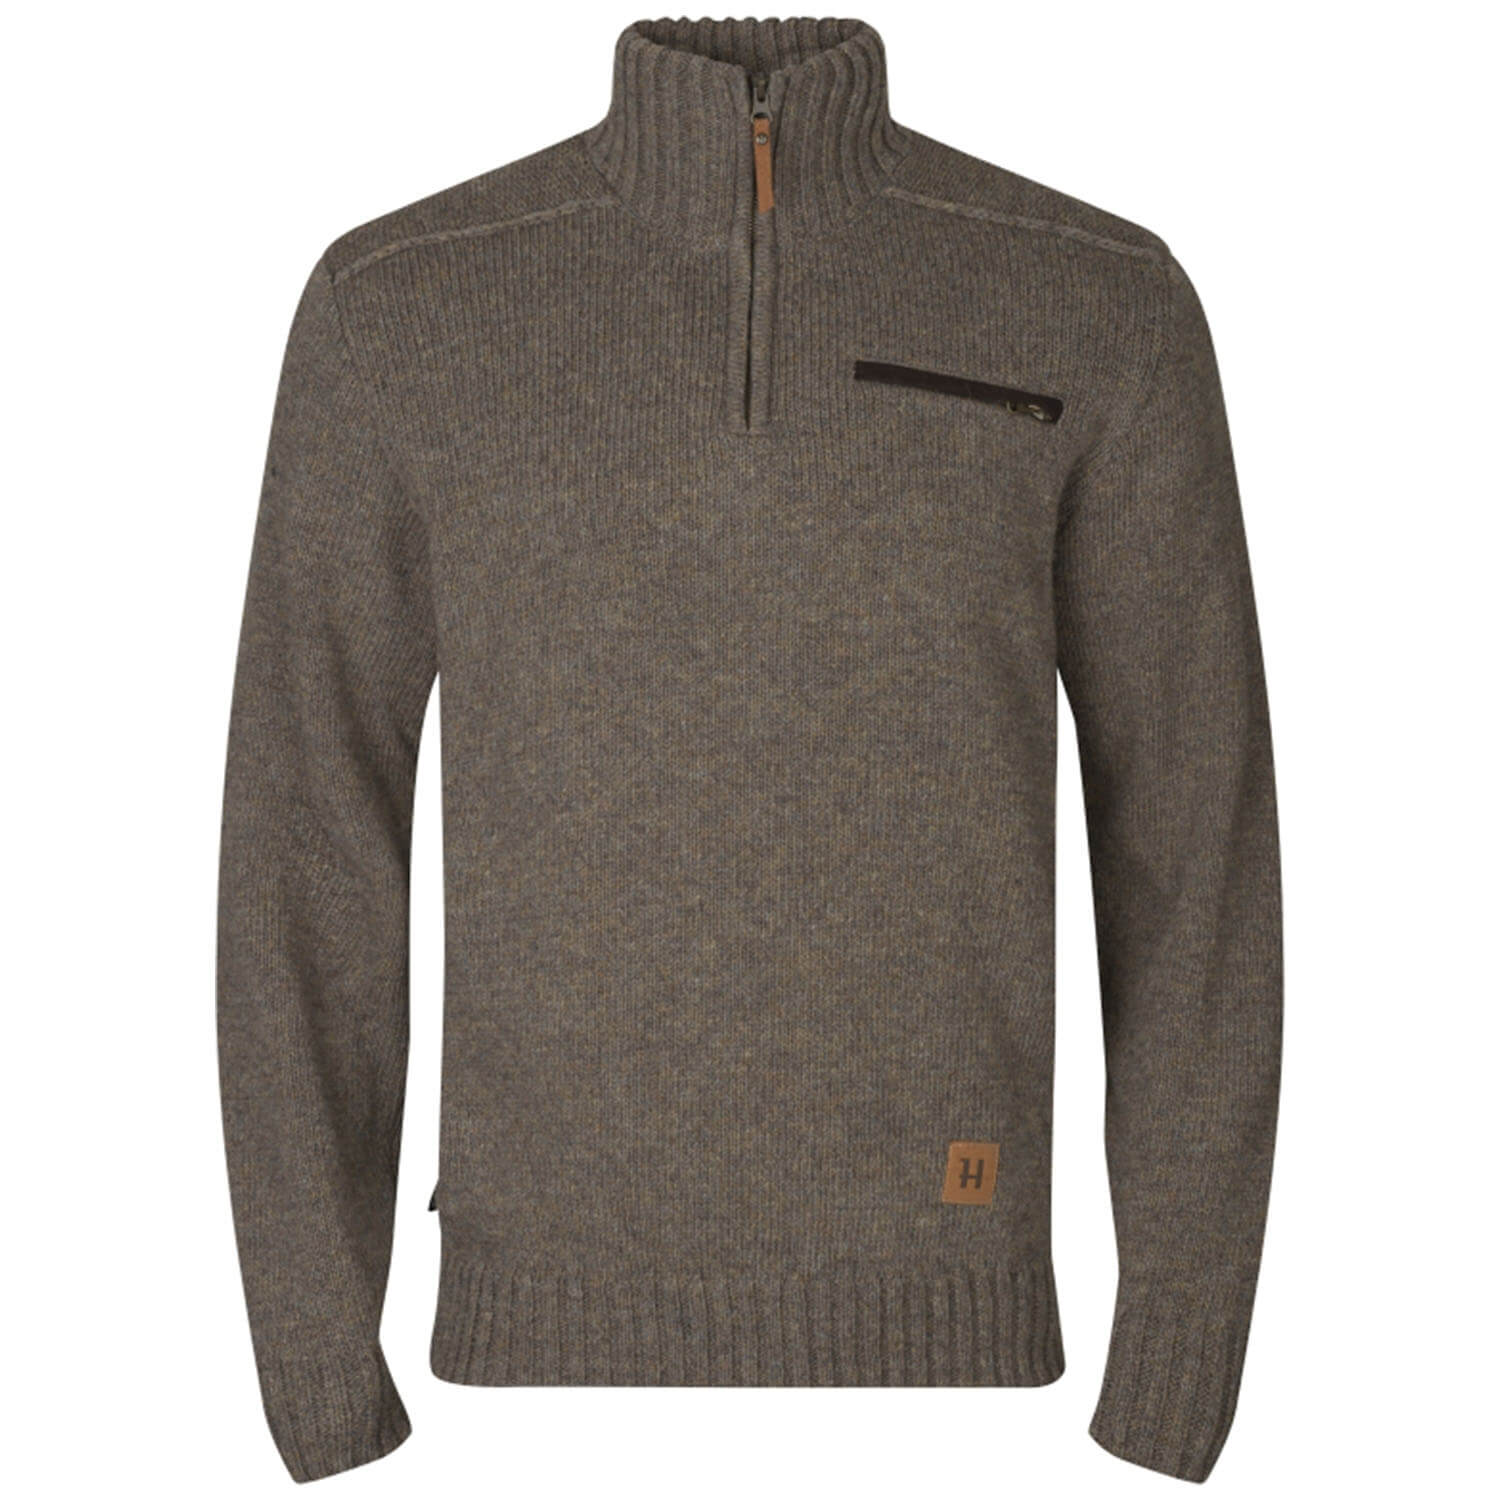 Härkila sweater annaboda 2.0 HSP (dark sand) - Sweaters & Jerseys